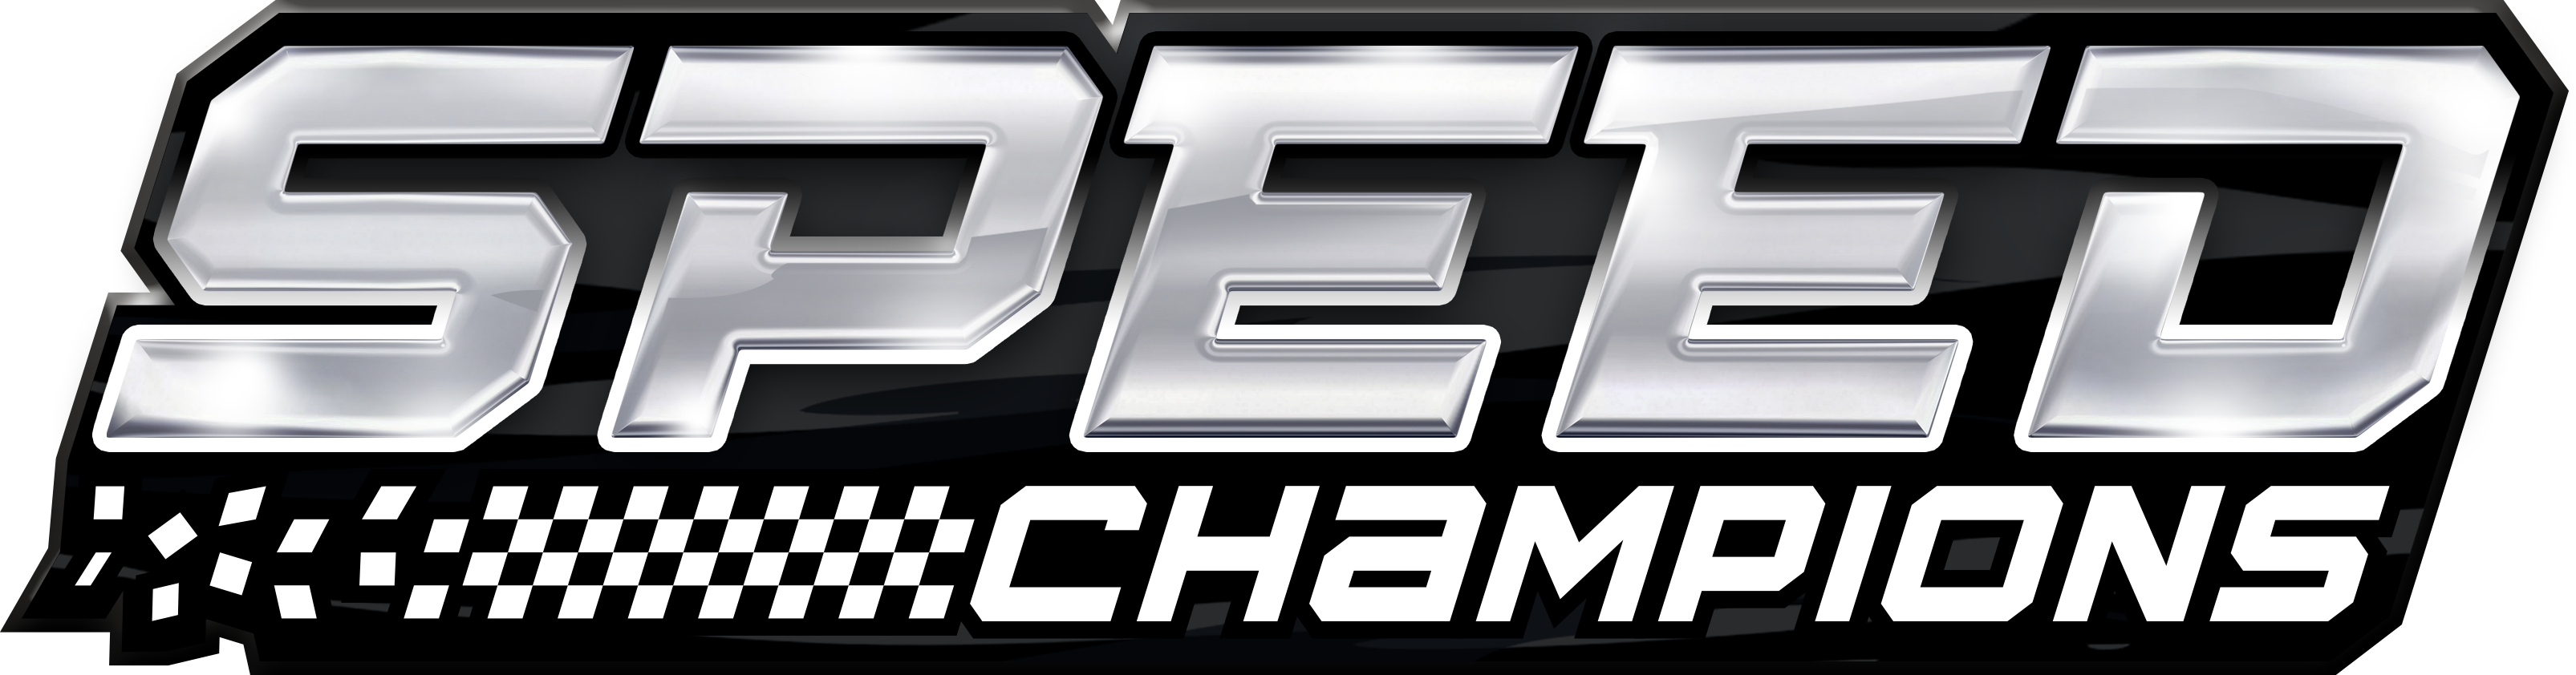 Black Champion logo, Champion Web design Art, champion, text